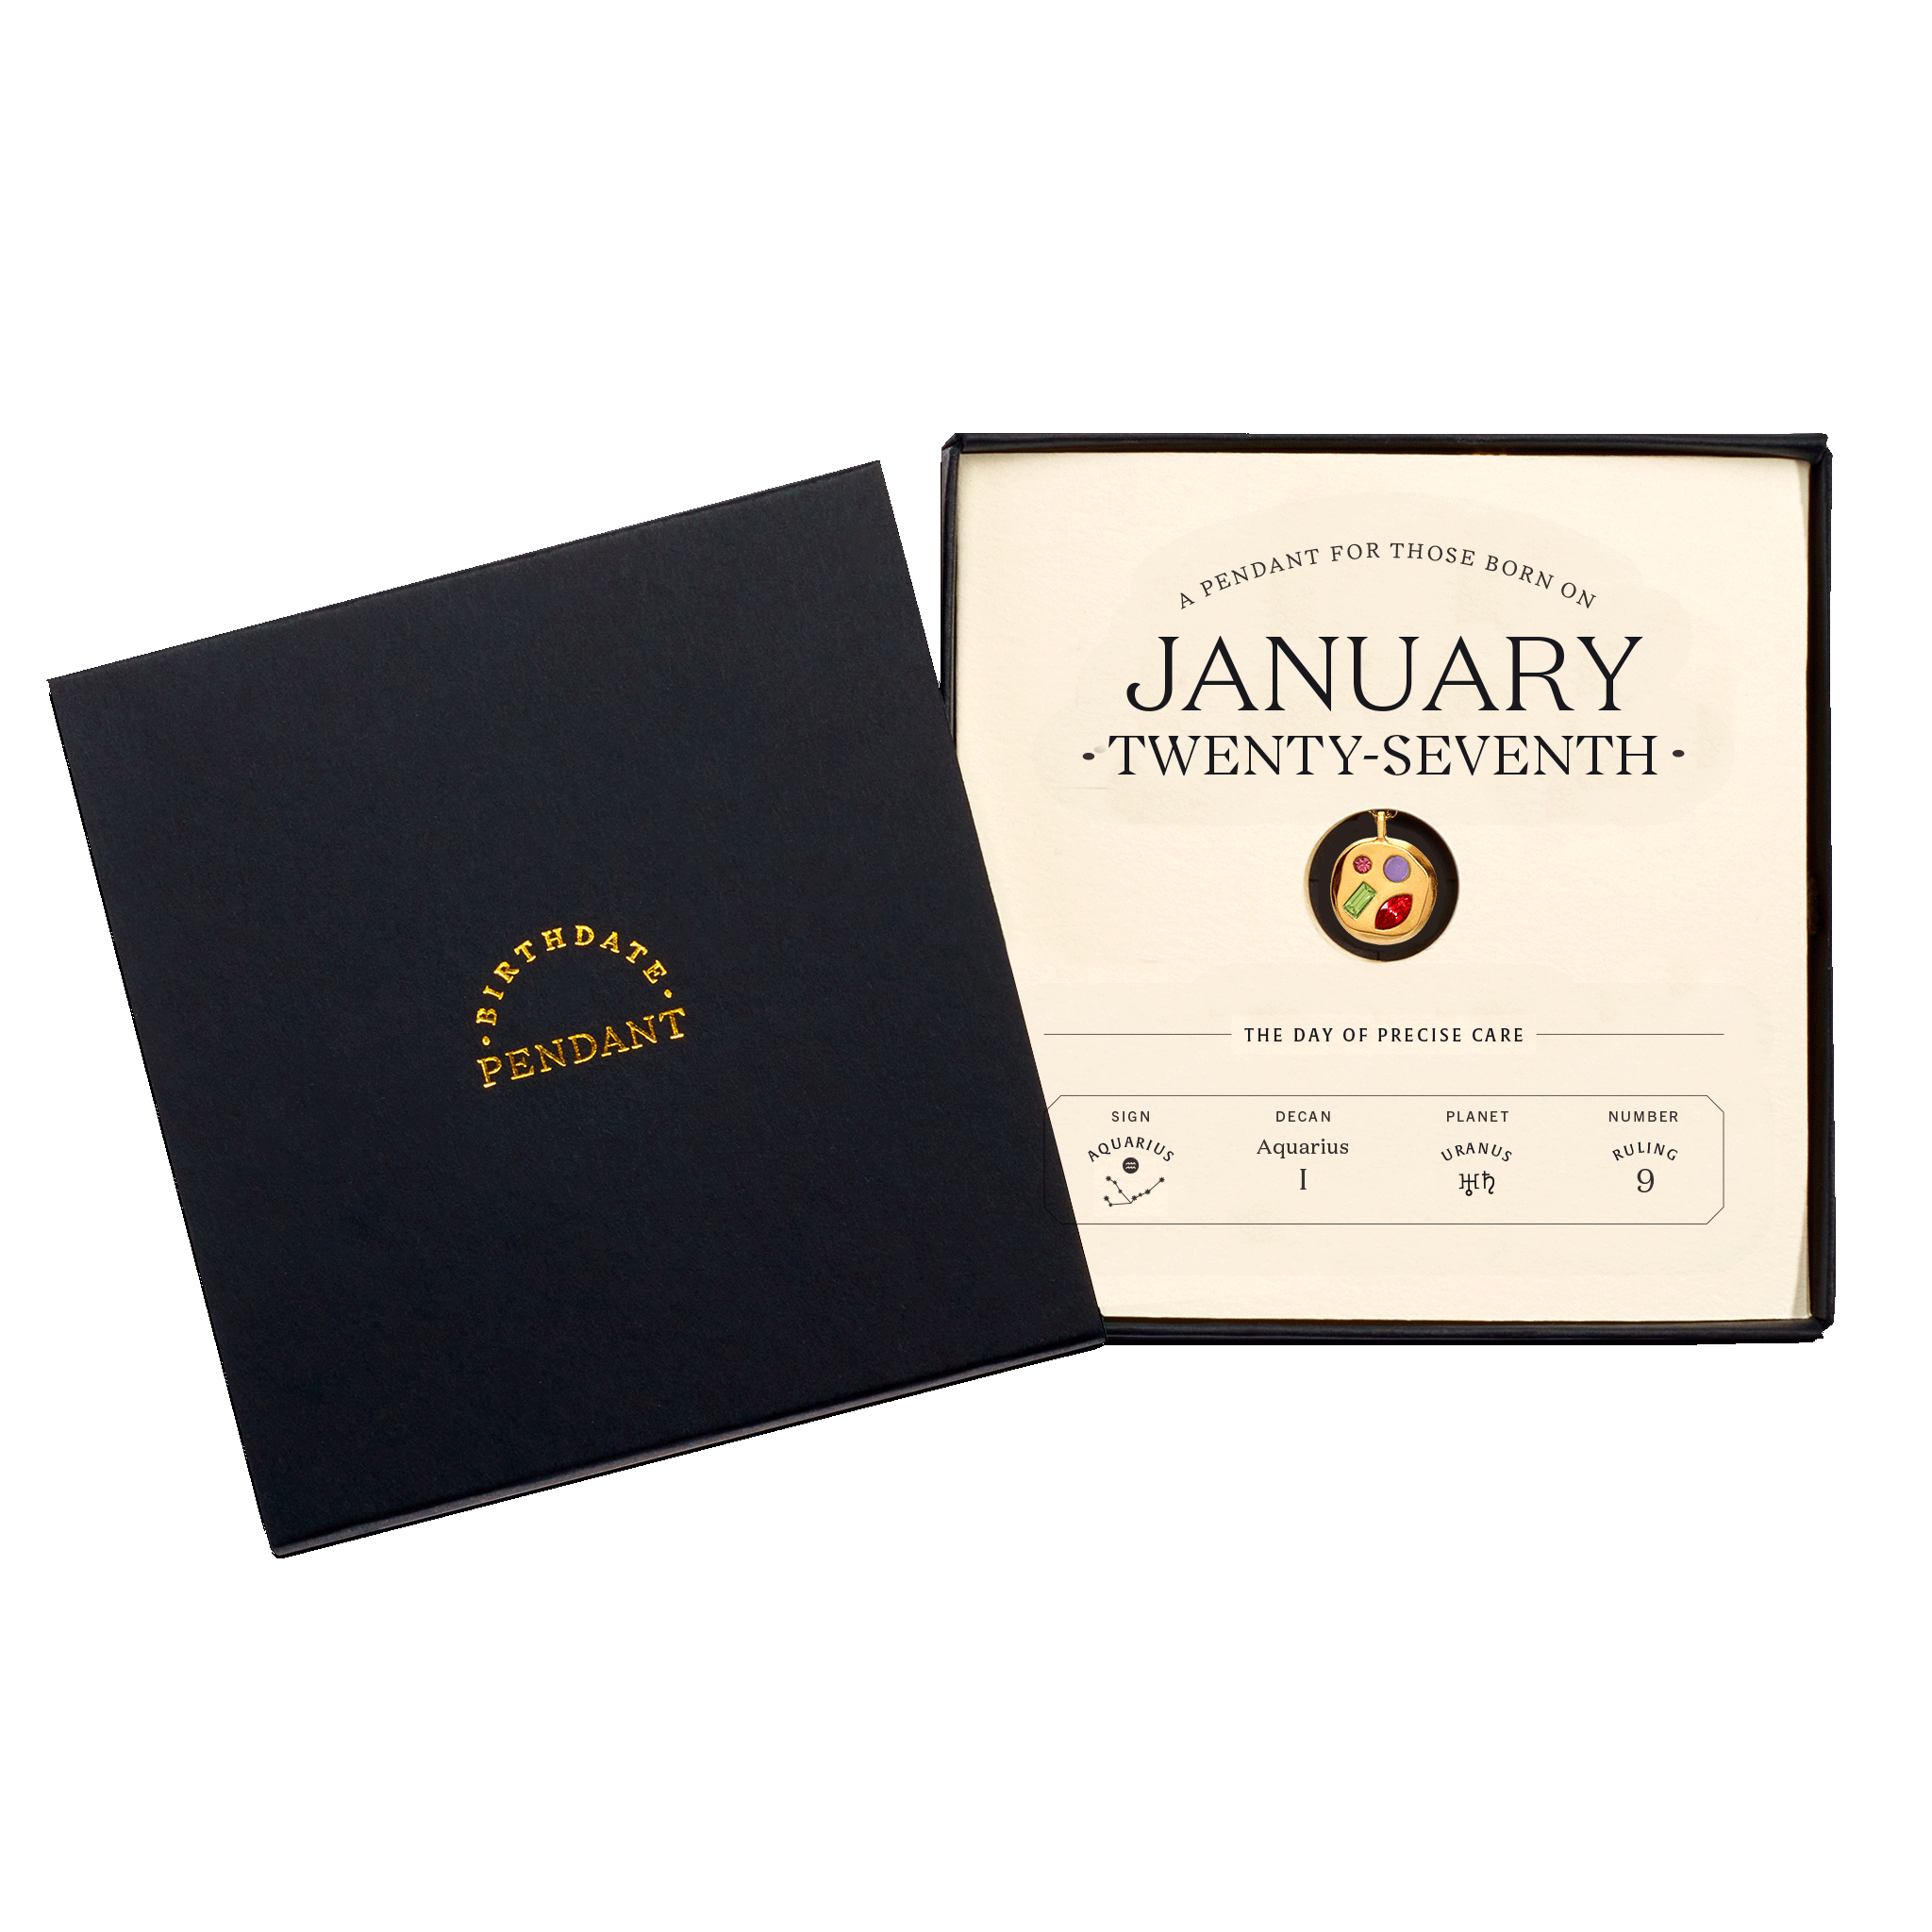 The January Twenty-Seventh Pendant inside its box